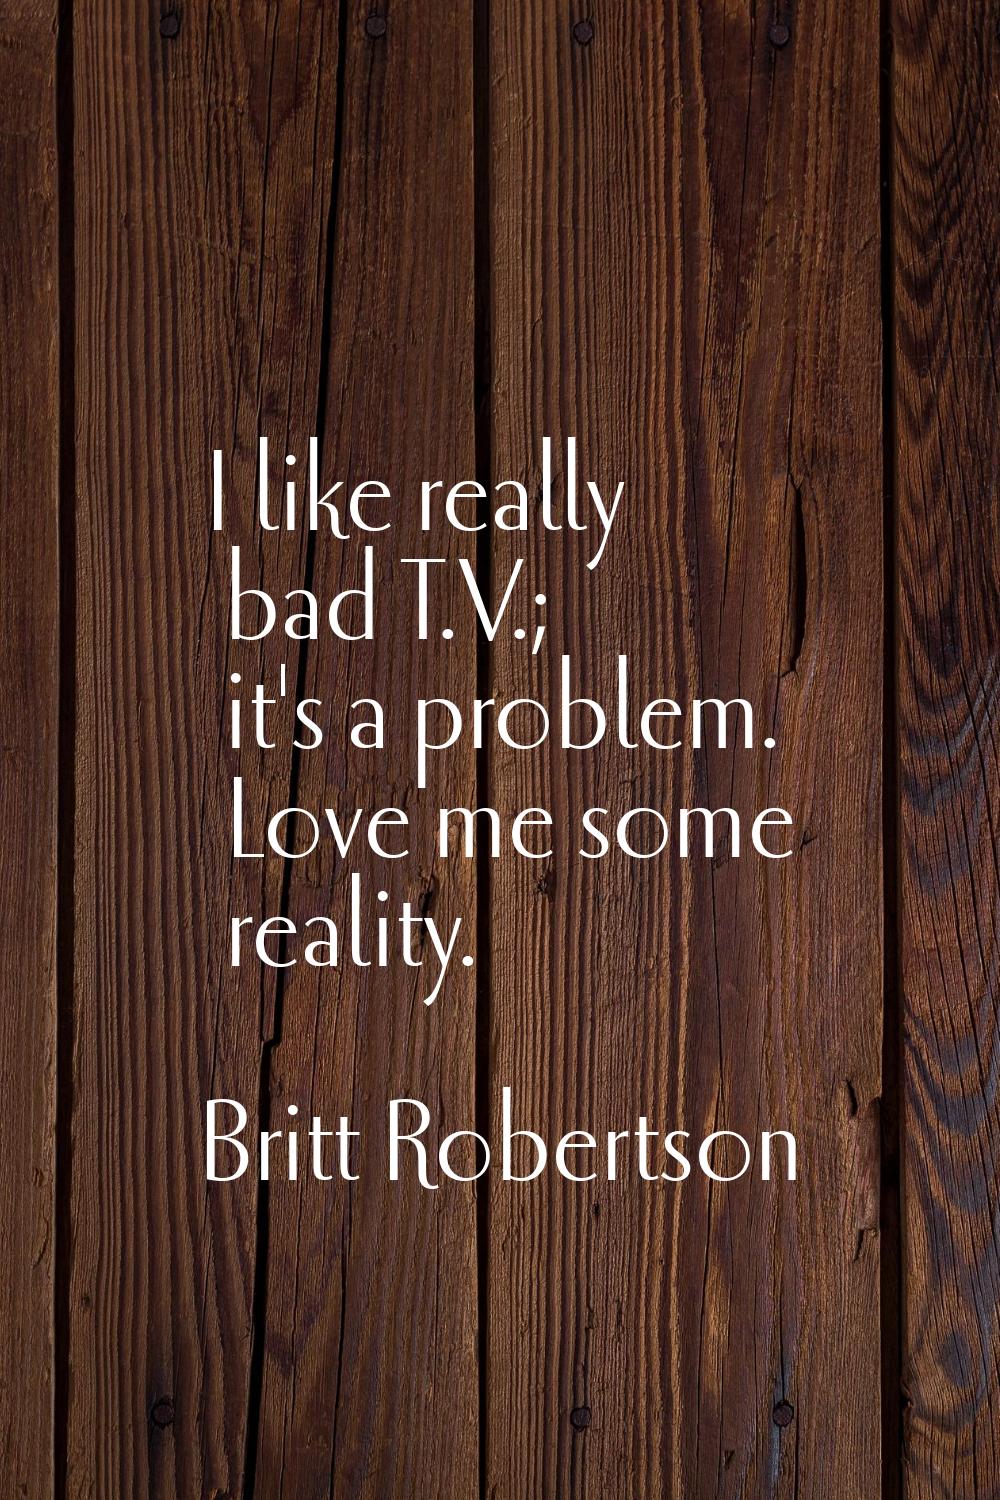 I like really bad T.V.; it's a problem. Love me some reality.